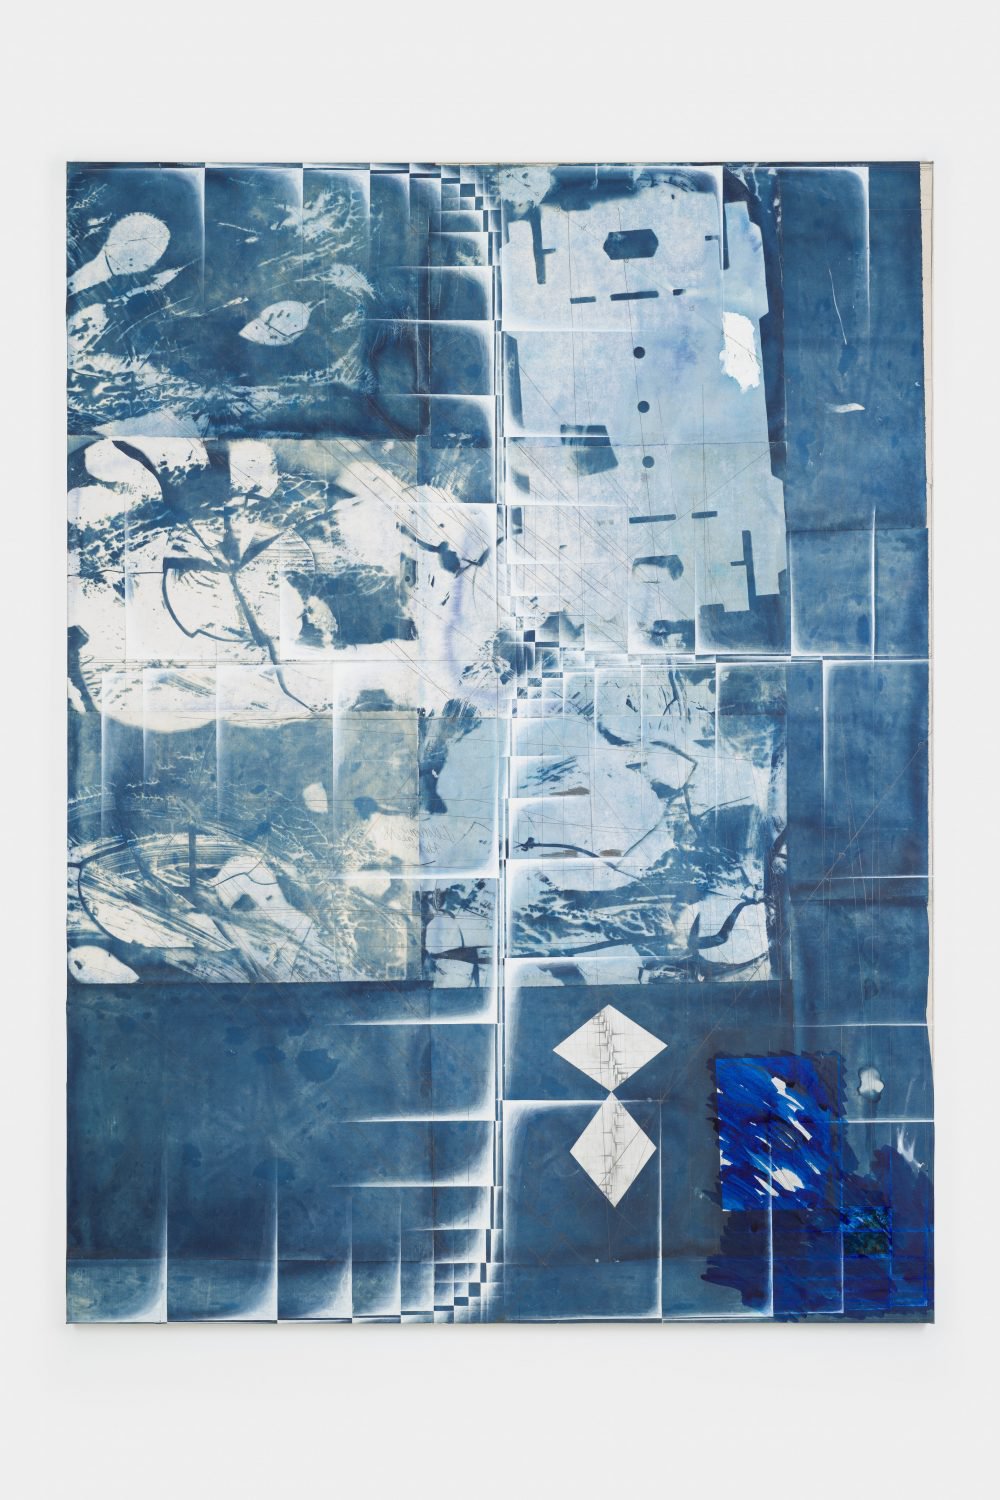 Tillman KaiserUntitled, 2018Photogram on paper on canvas200 x 150 cm